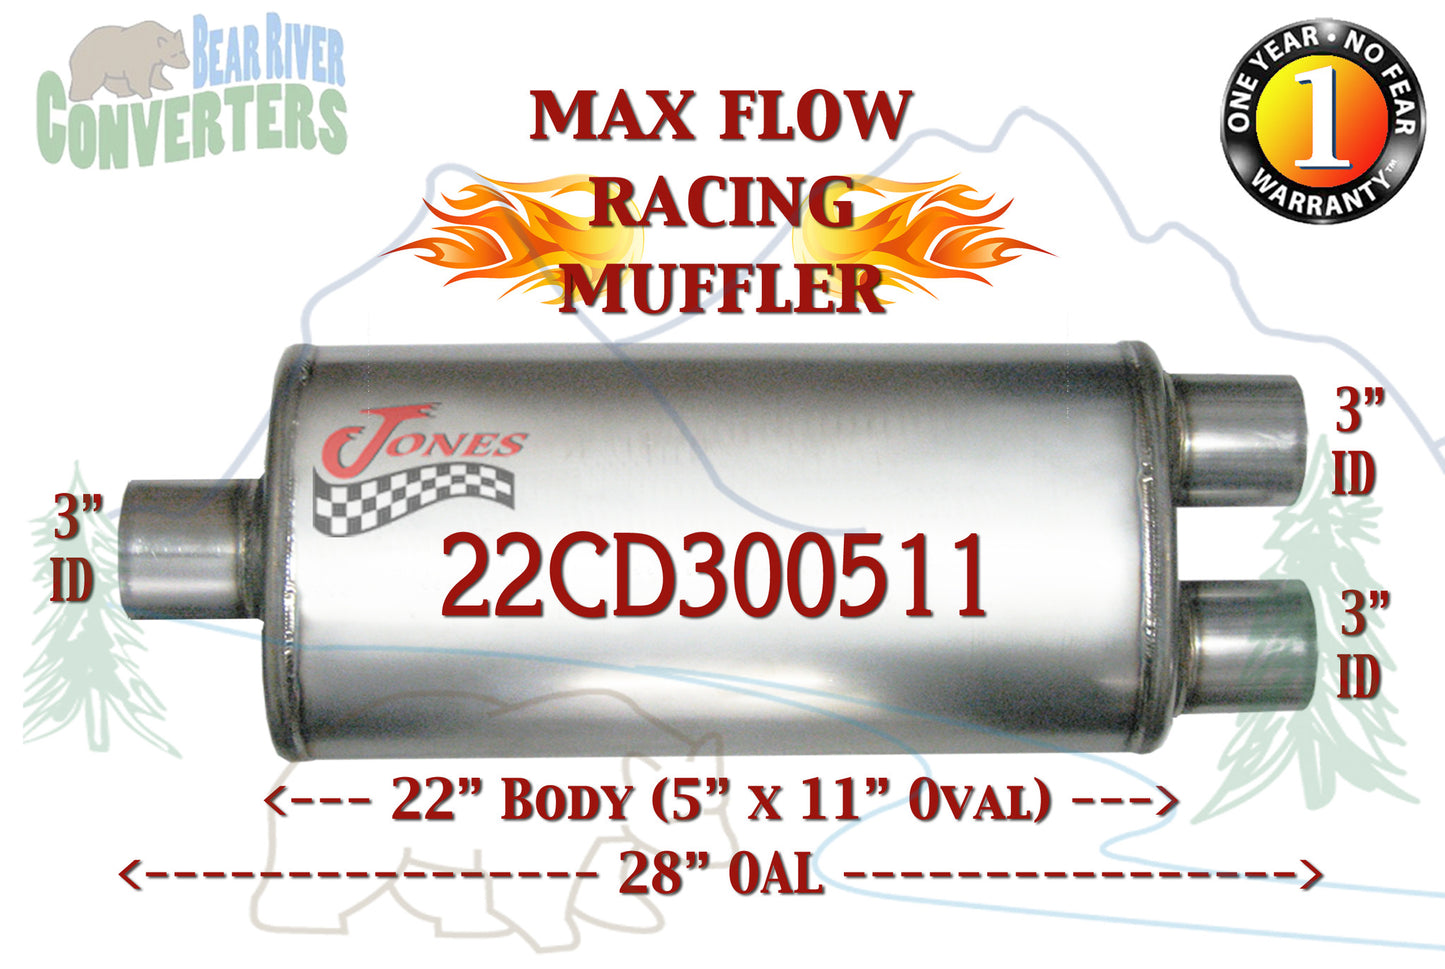 22CD300511 Jones MF2590 Max Flow Racing Muffler 22” Oval Body 3” Pipe Center/Dual 28” OAL - Bear River Converters